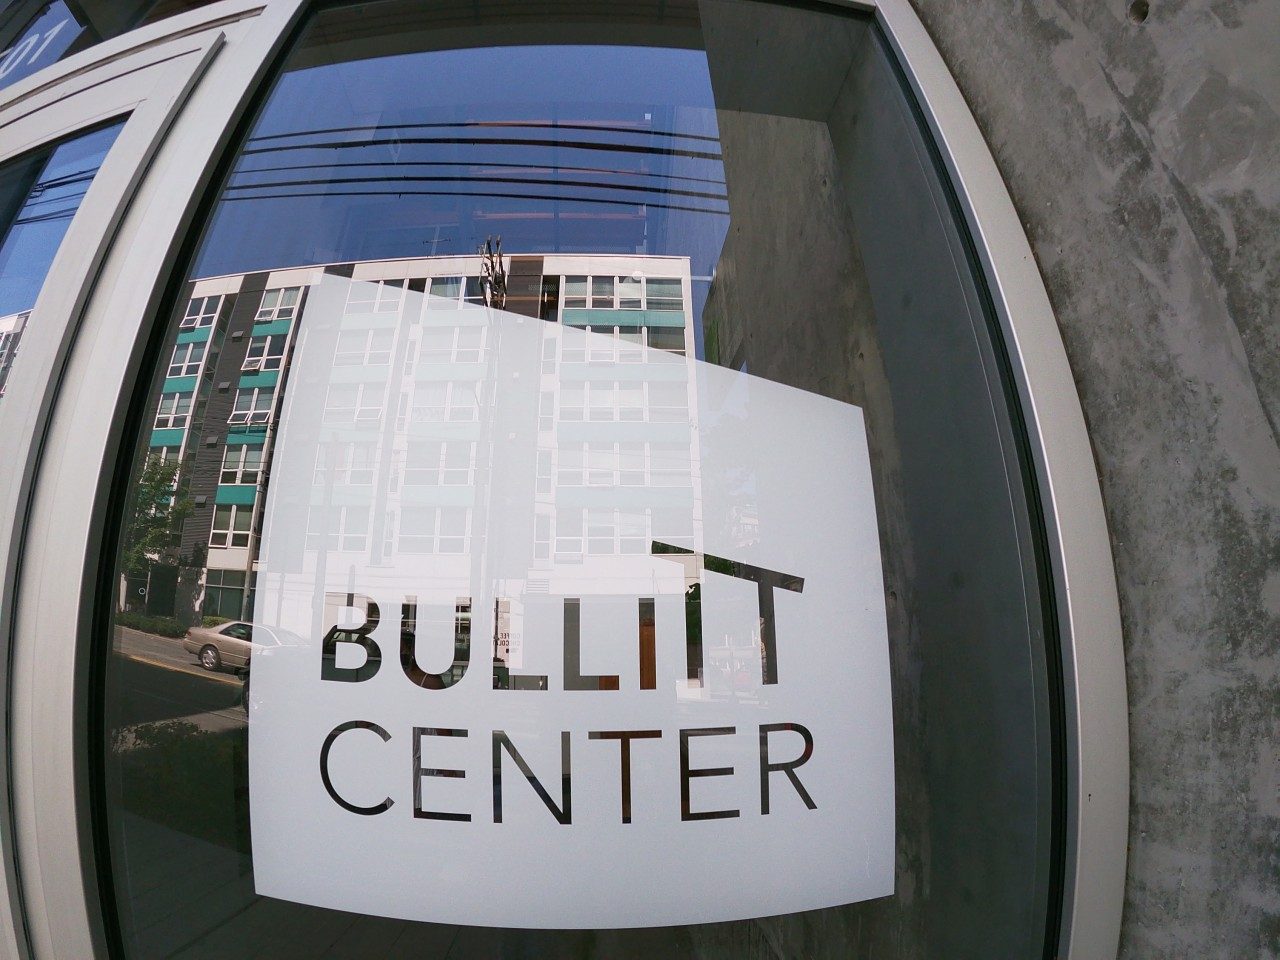 Bullitt Center, Seattle